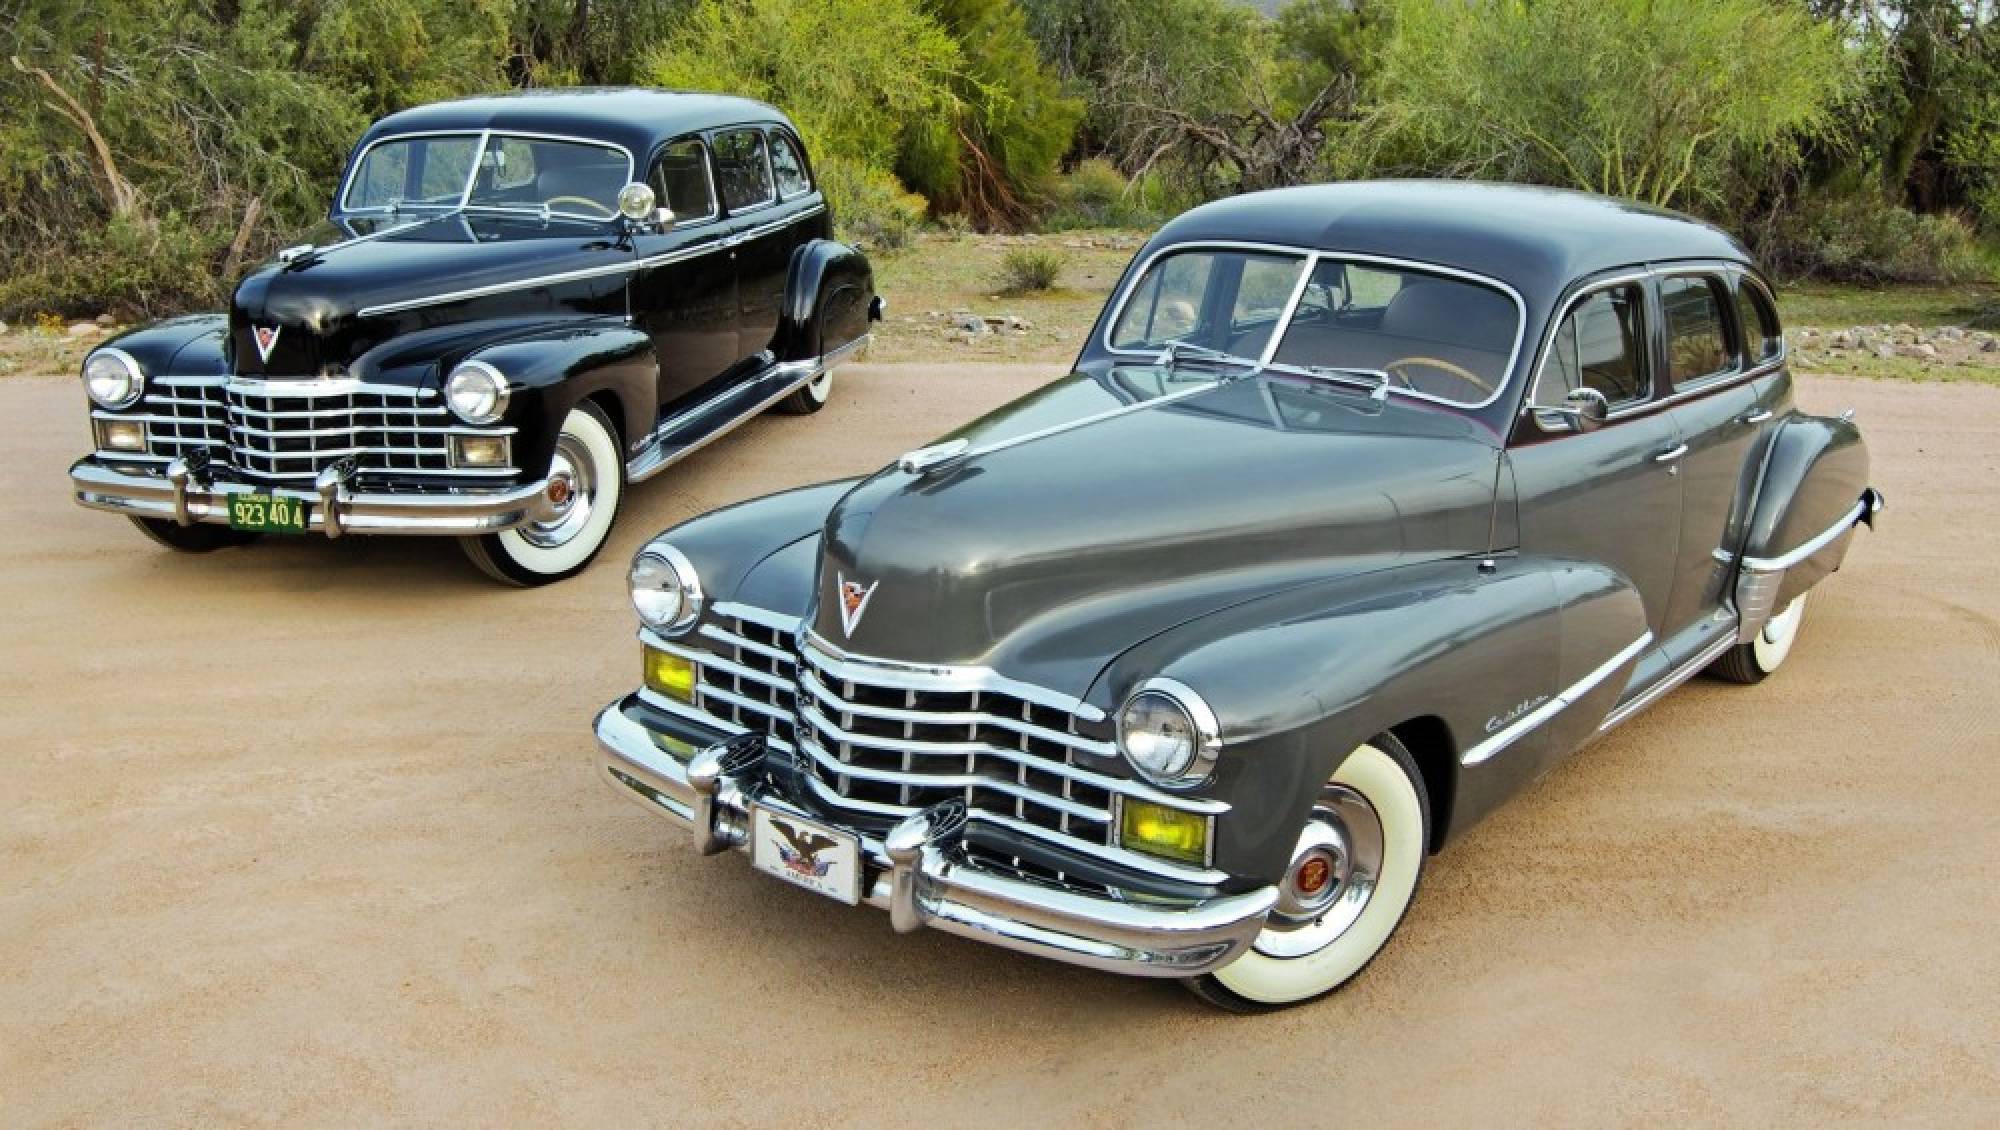 1947 Cadillac Fleetwod Backgrounds, Compatible - PC, Mobile, Gadgets| 2000x1130 px